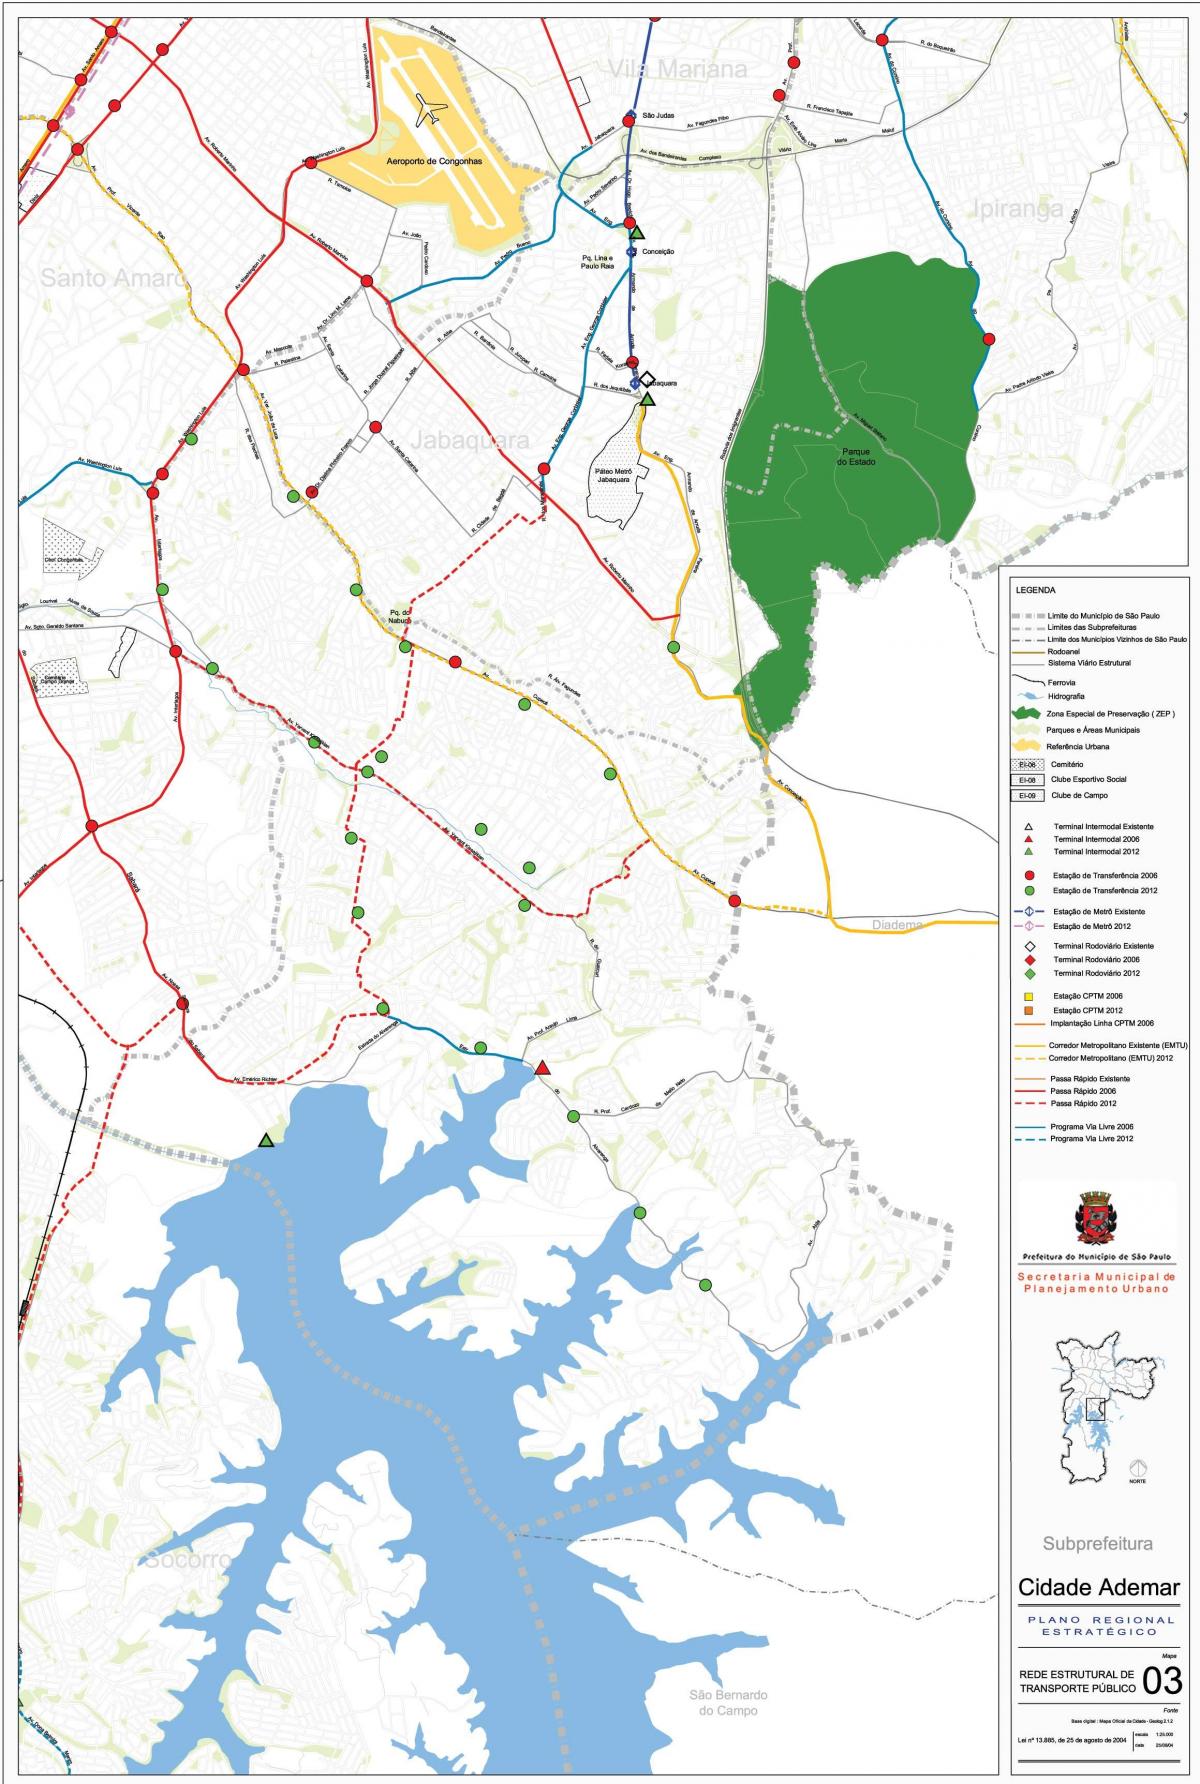 Карта Сидаде Адемаре Сан-Паулу - общественный транспорт